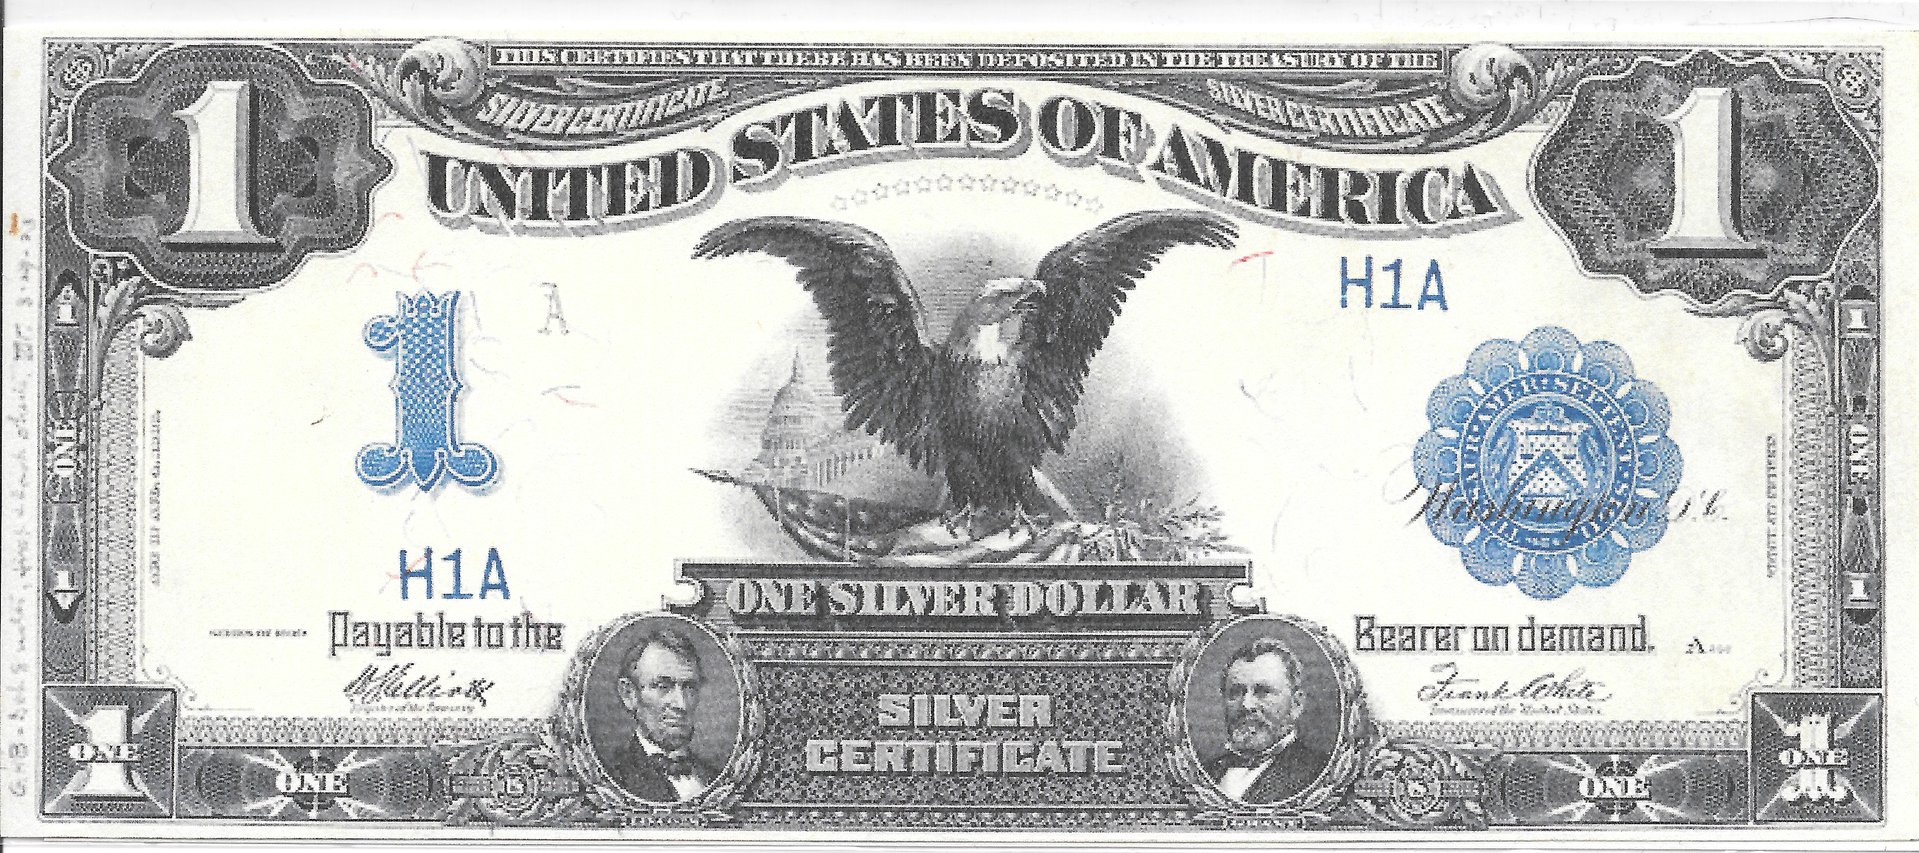 Us currency. Банкнота 1 доллар США. 1 Доллар 1899. Бумажные американские доллары. Американская купюра 1 доллар.